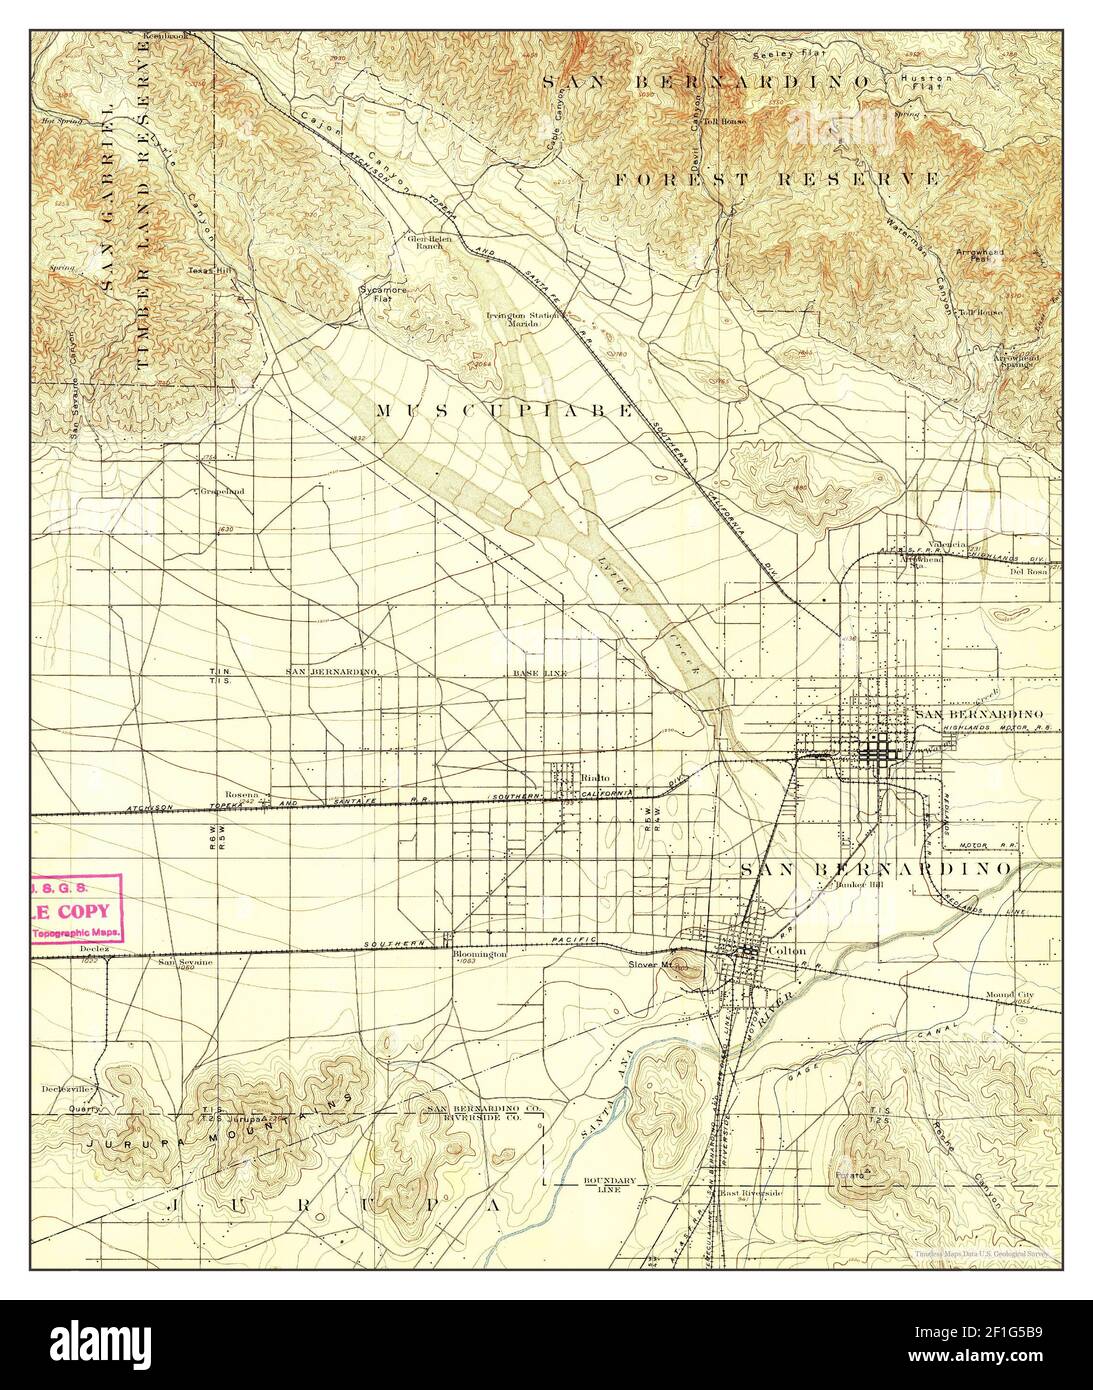 San Bernardino, California, map 1896, 1:62500, United States of America by Timeless Maps, data U.S. Geological Survey Foto Stock